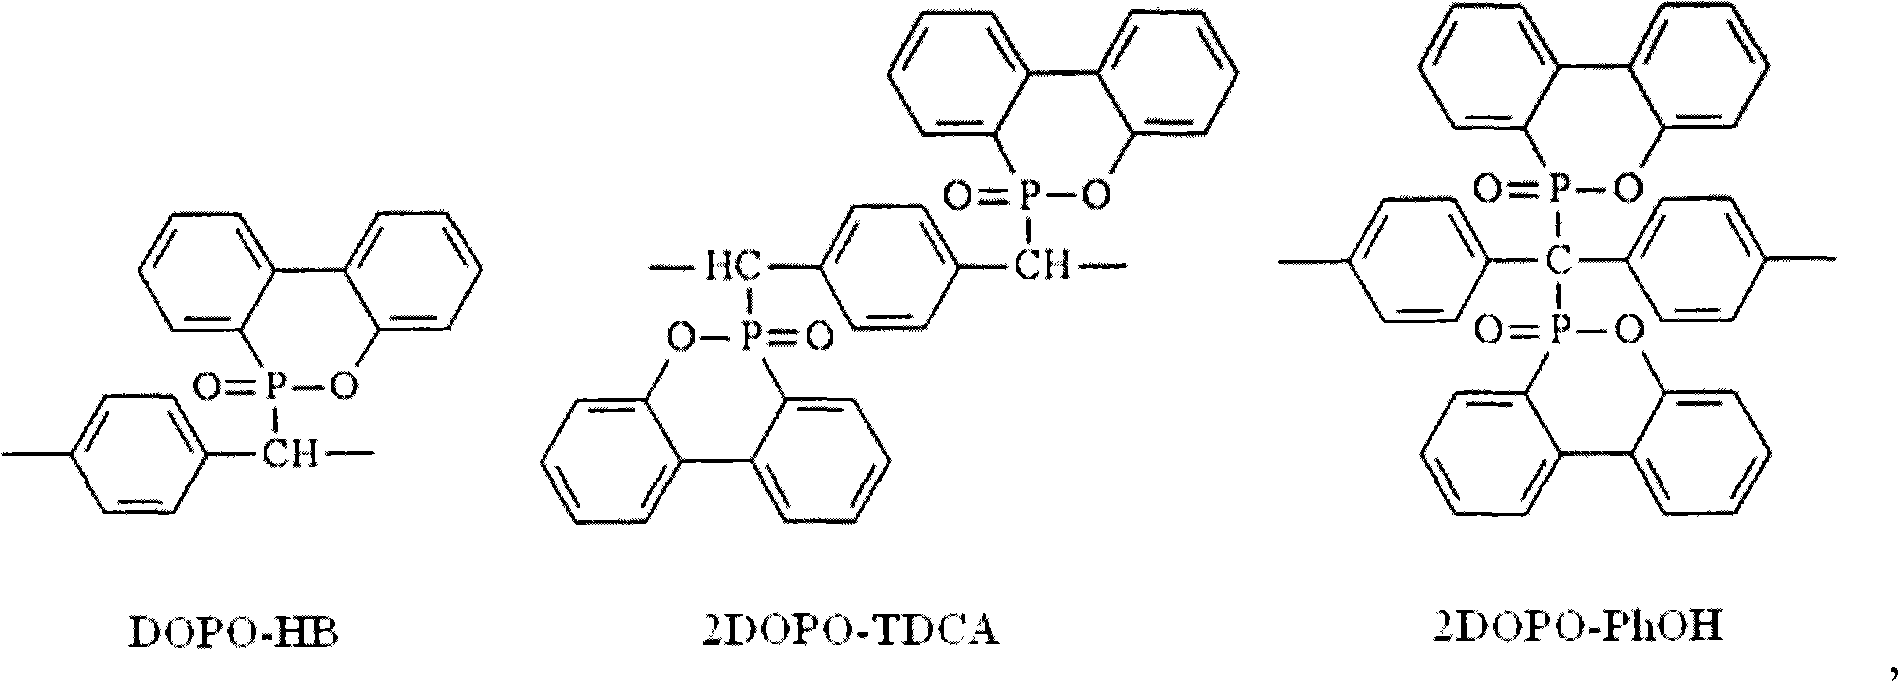 Polymer type phosphorous flame retardant containing DOPO and preparation method thereof